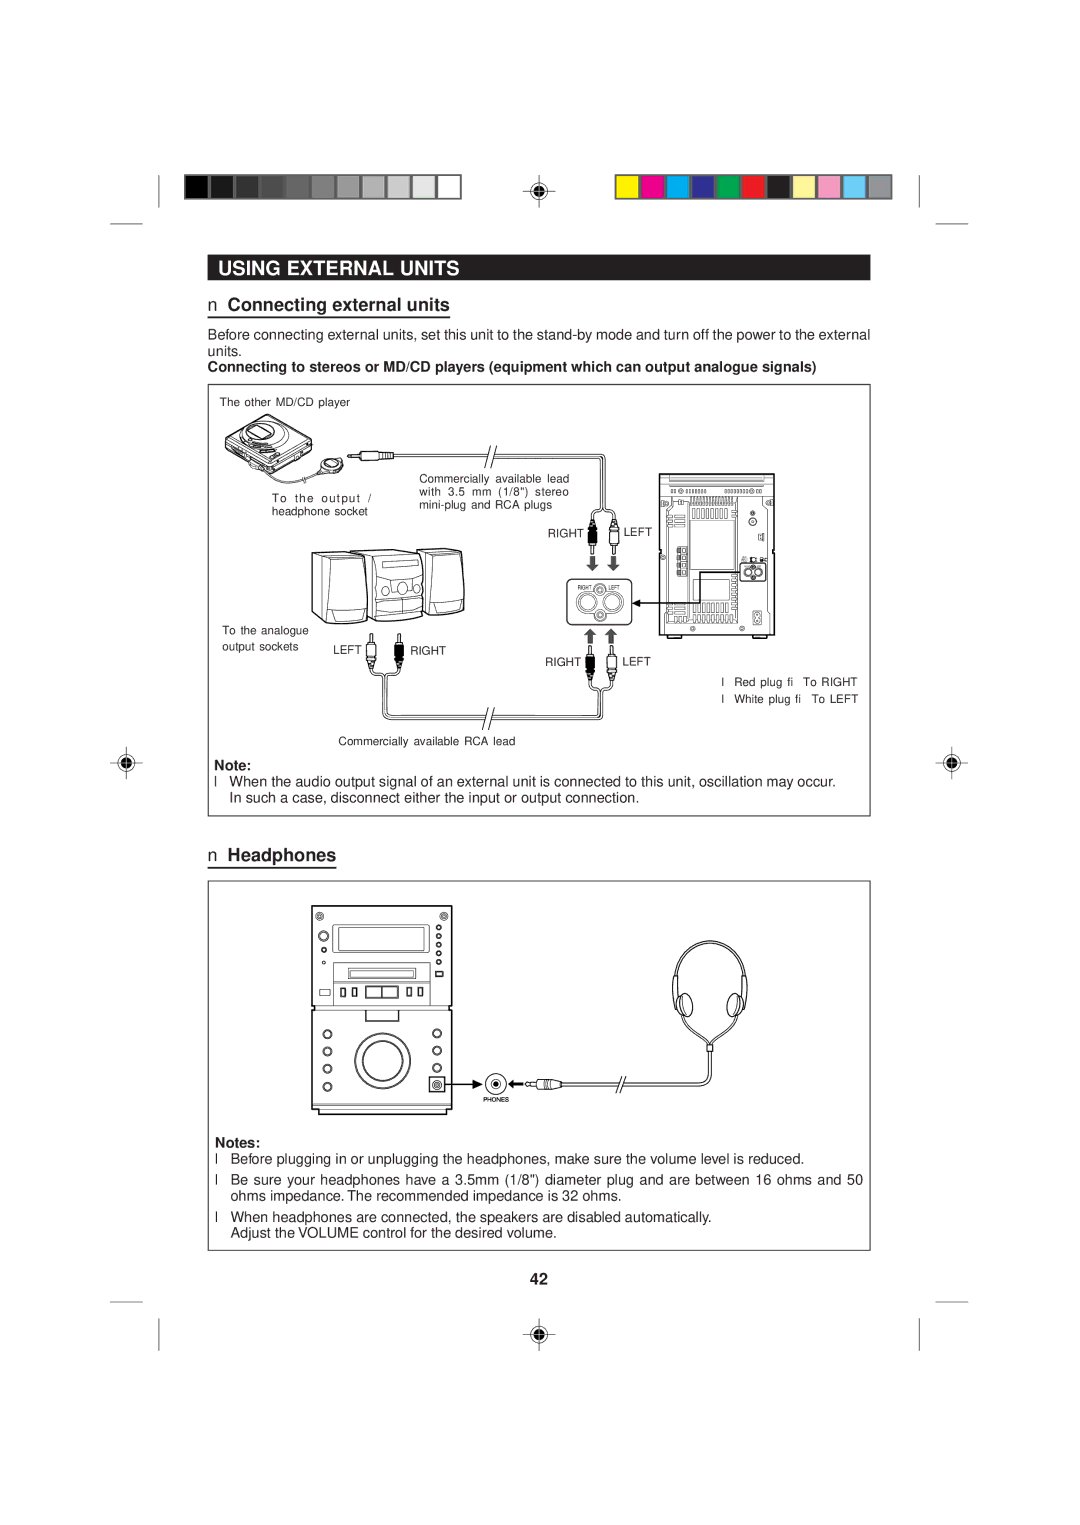 Sharp MD-M2H operation manual Using External Units, Connecting external units, Headphones 